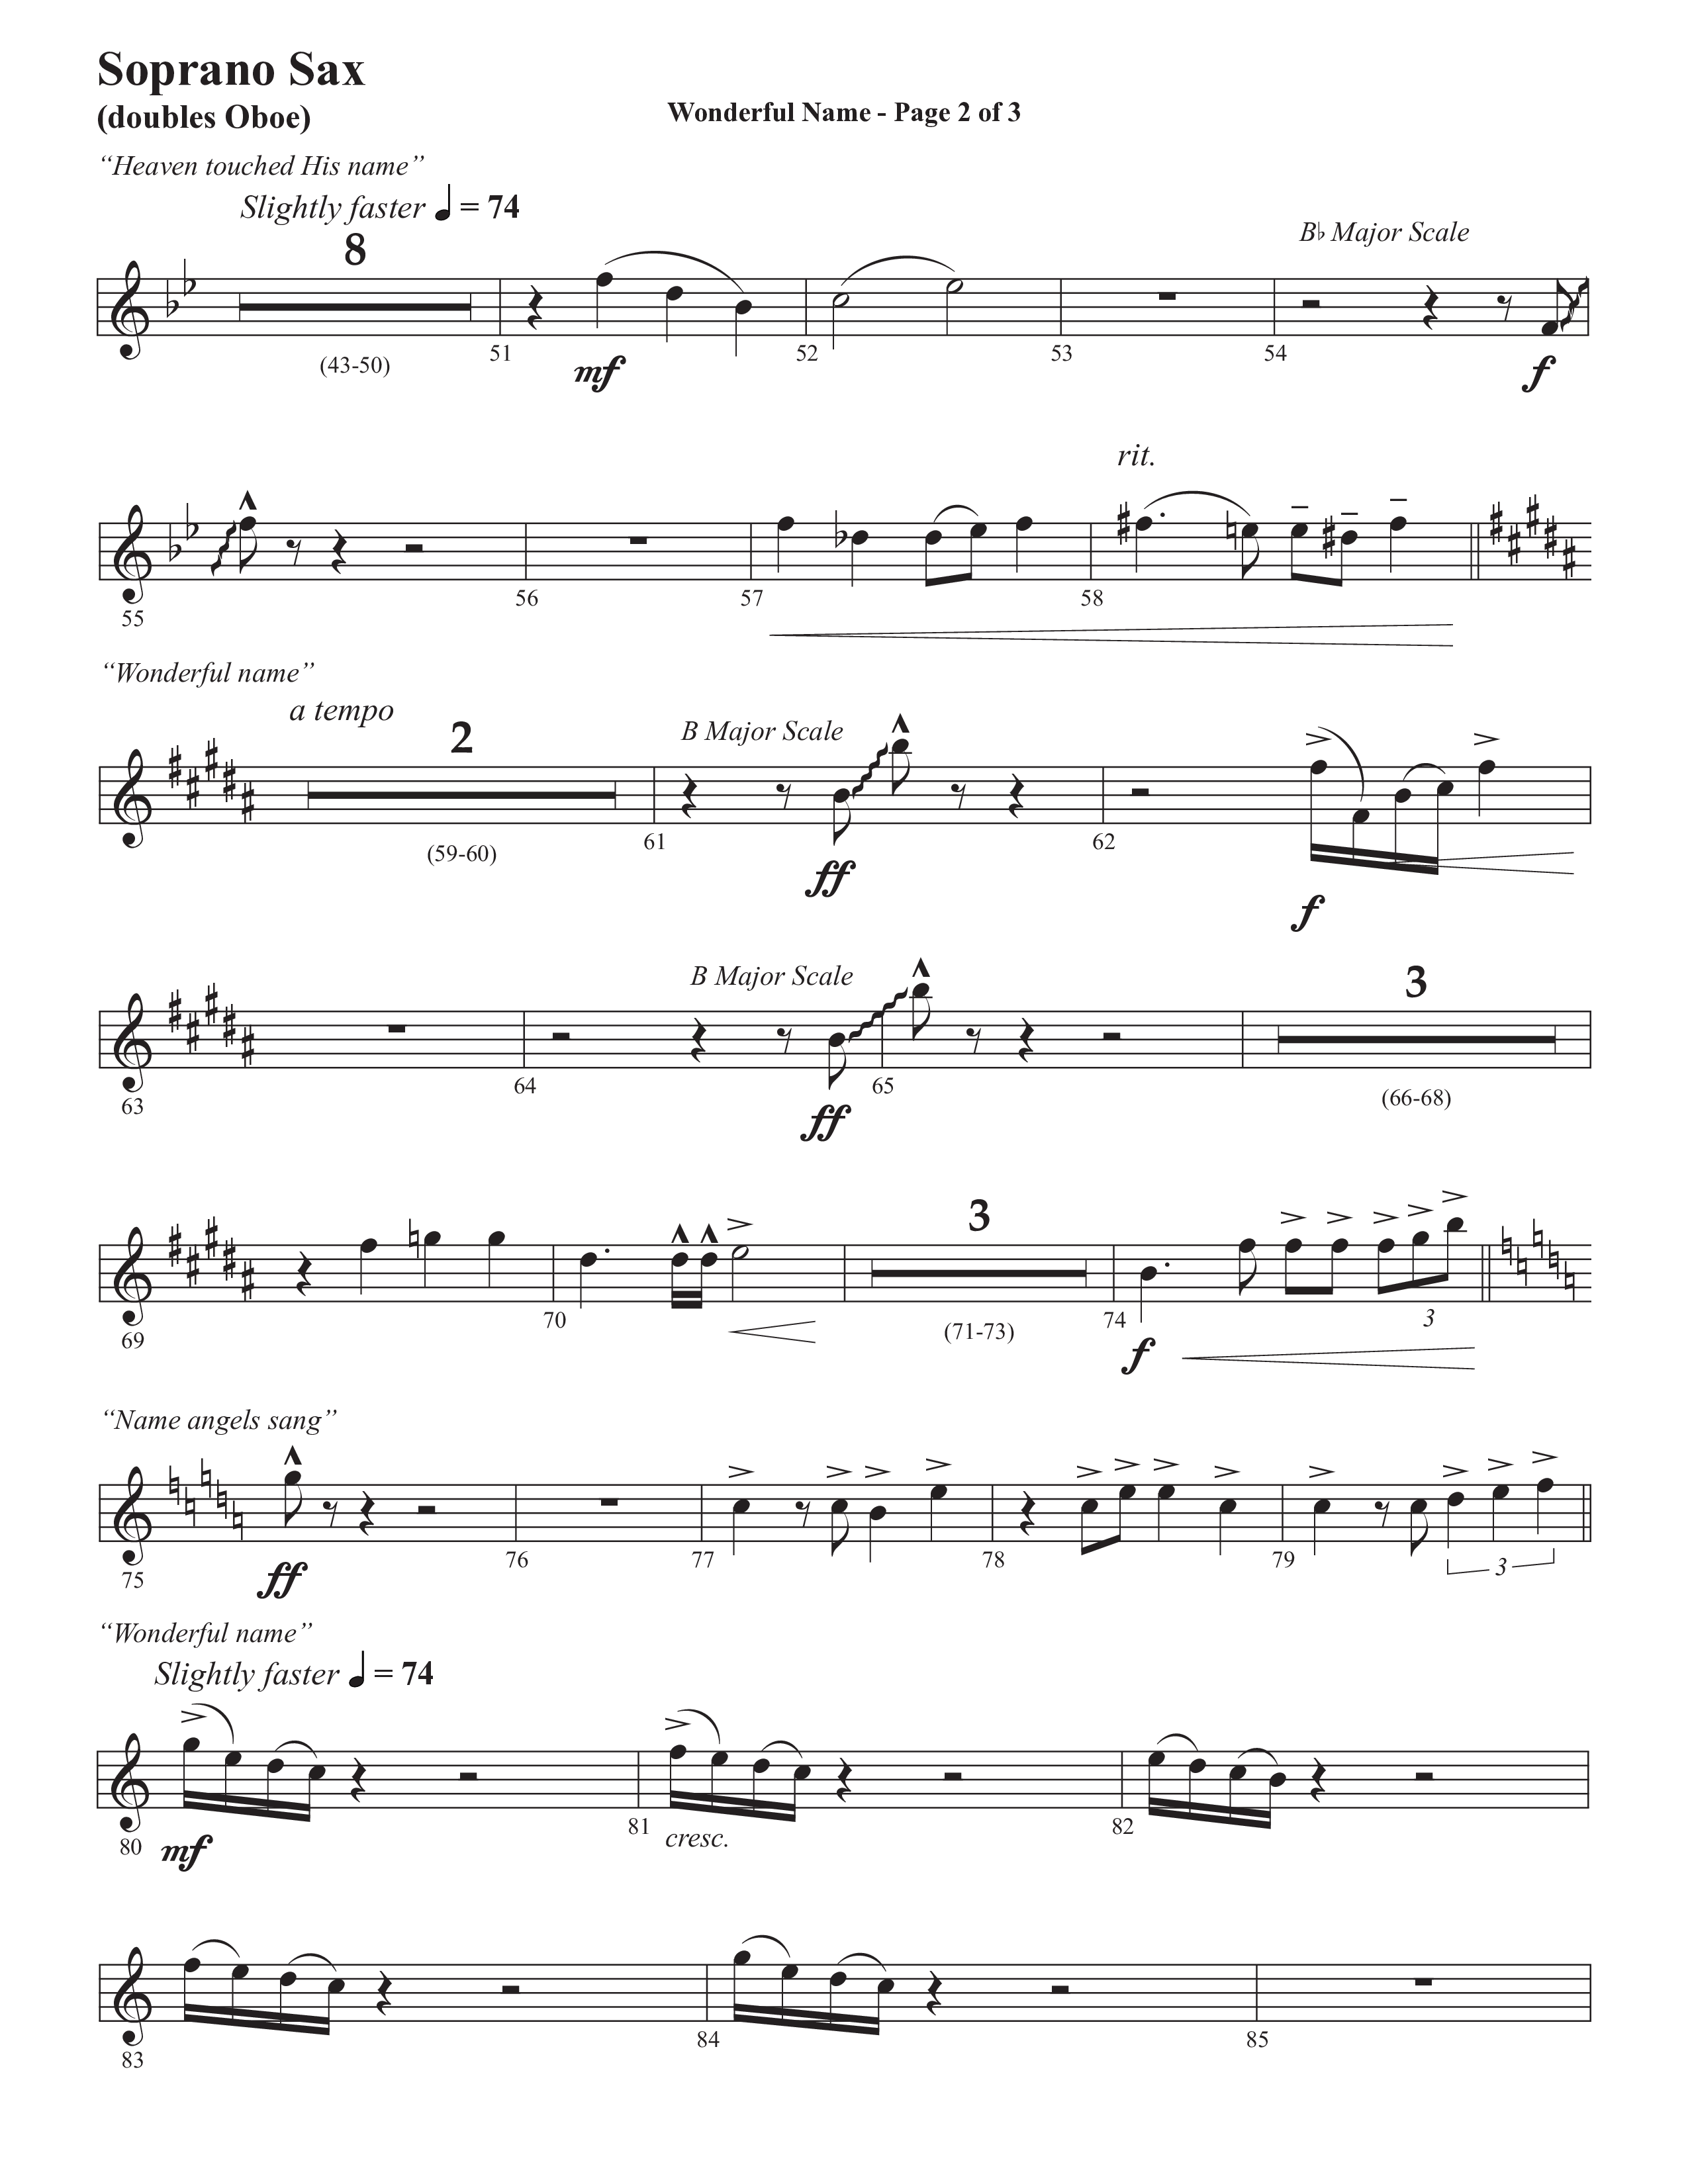 Wonderful Name (Choral Anthem SATB) Soprano Sax (Semsen Music / Arr. John Bolin / Orch. Cliff Duren)